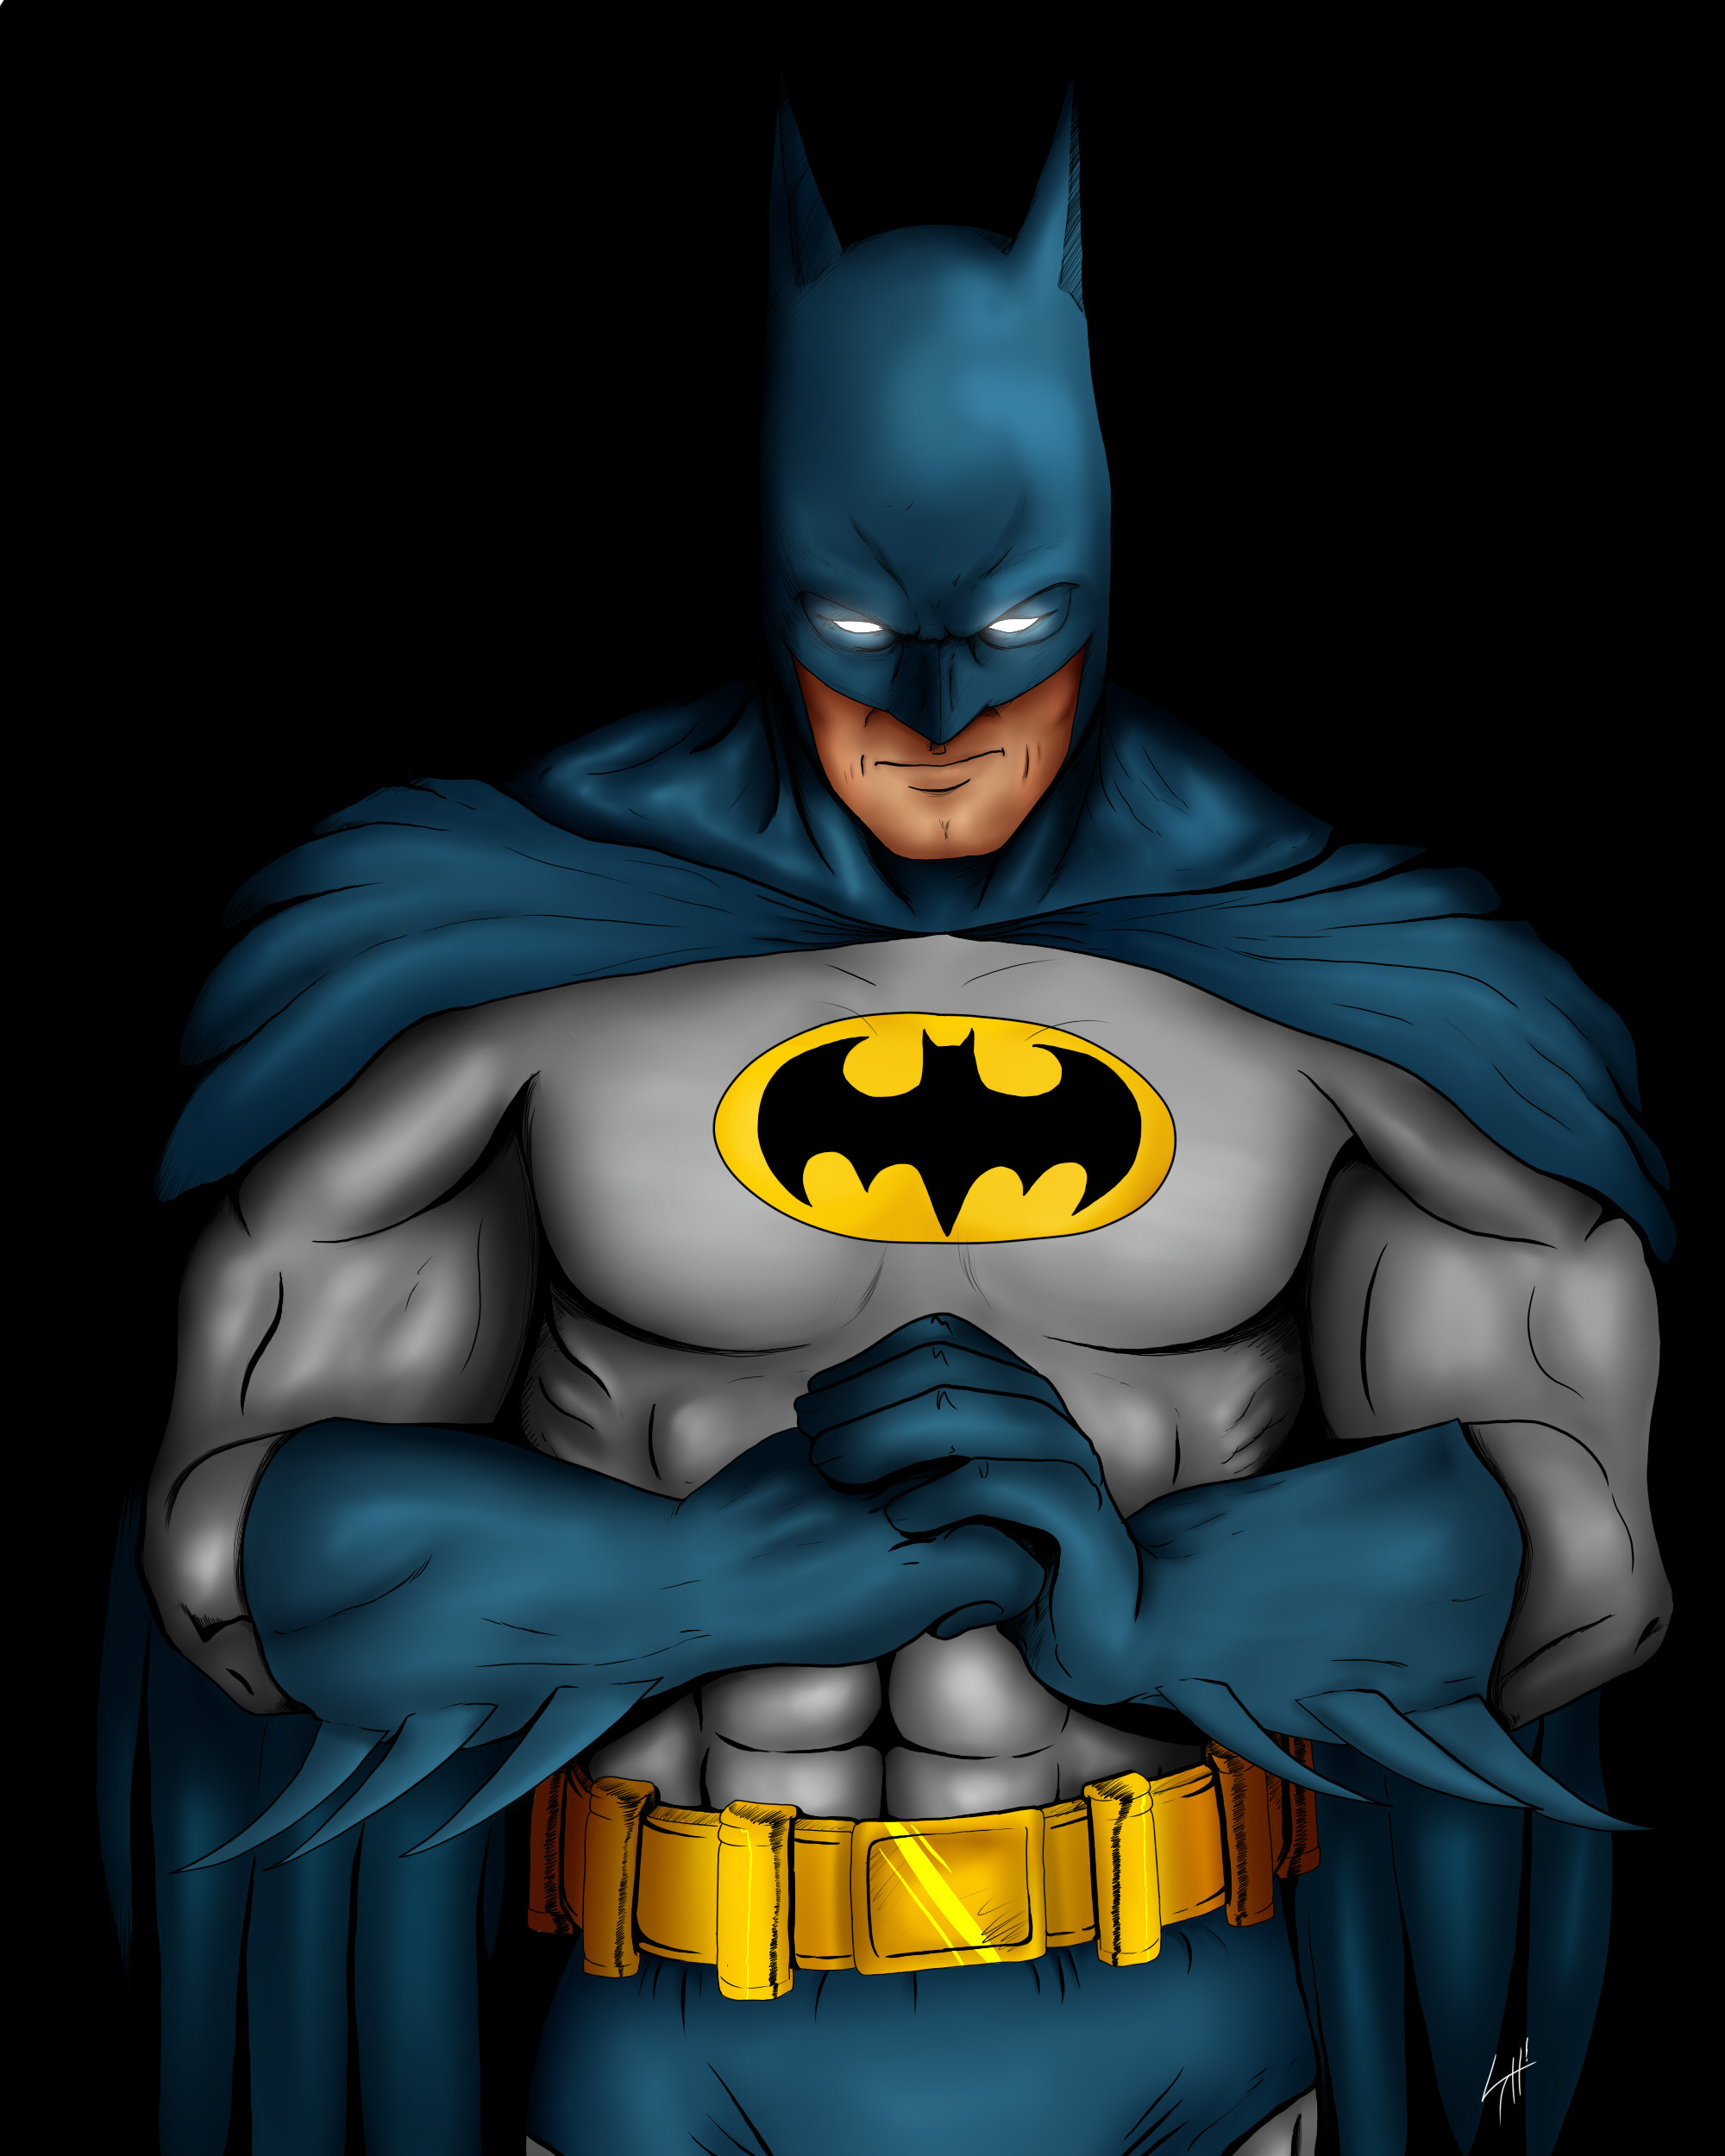 Batman Cartoon Wallpaper Image